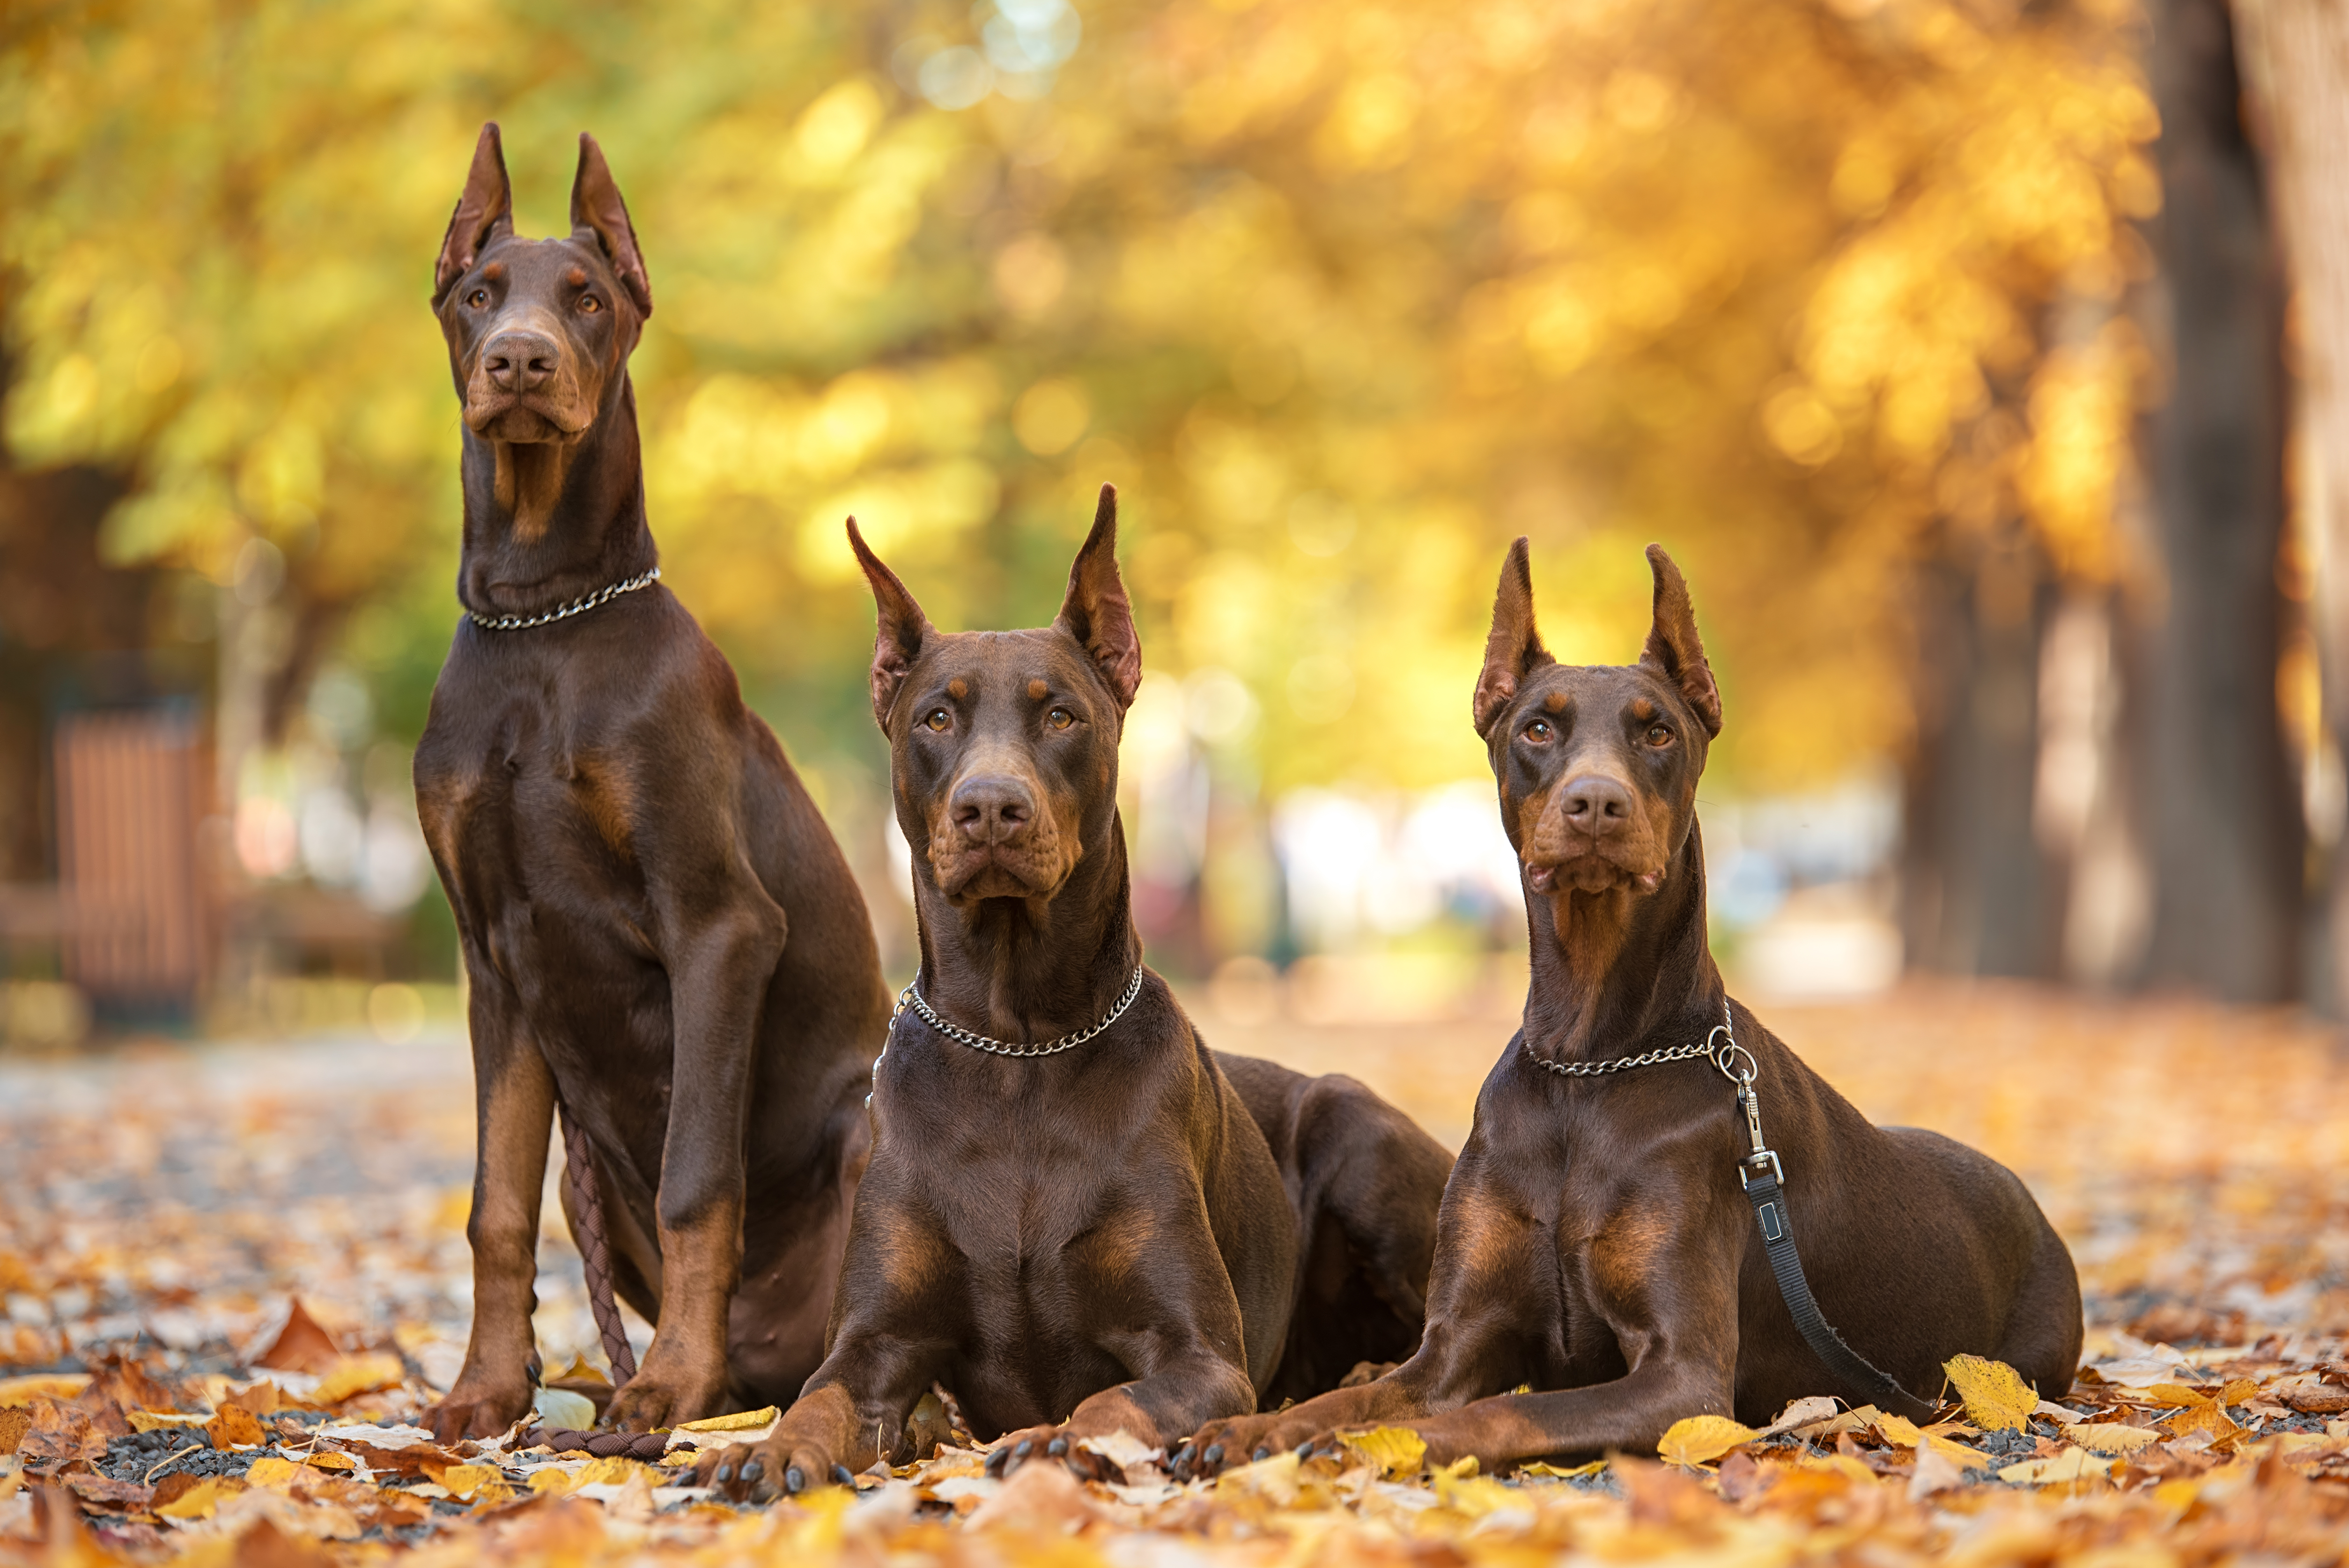 Three dogs | Source: Shutterstock